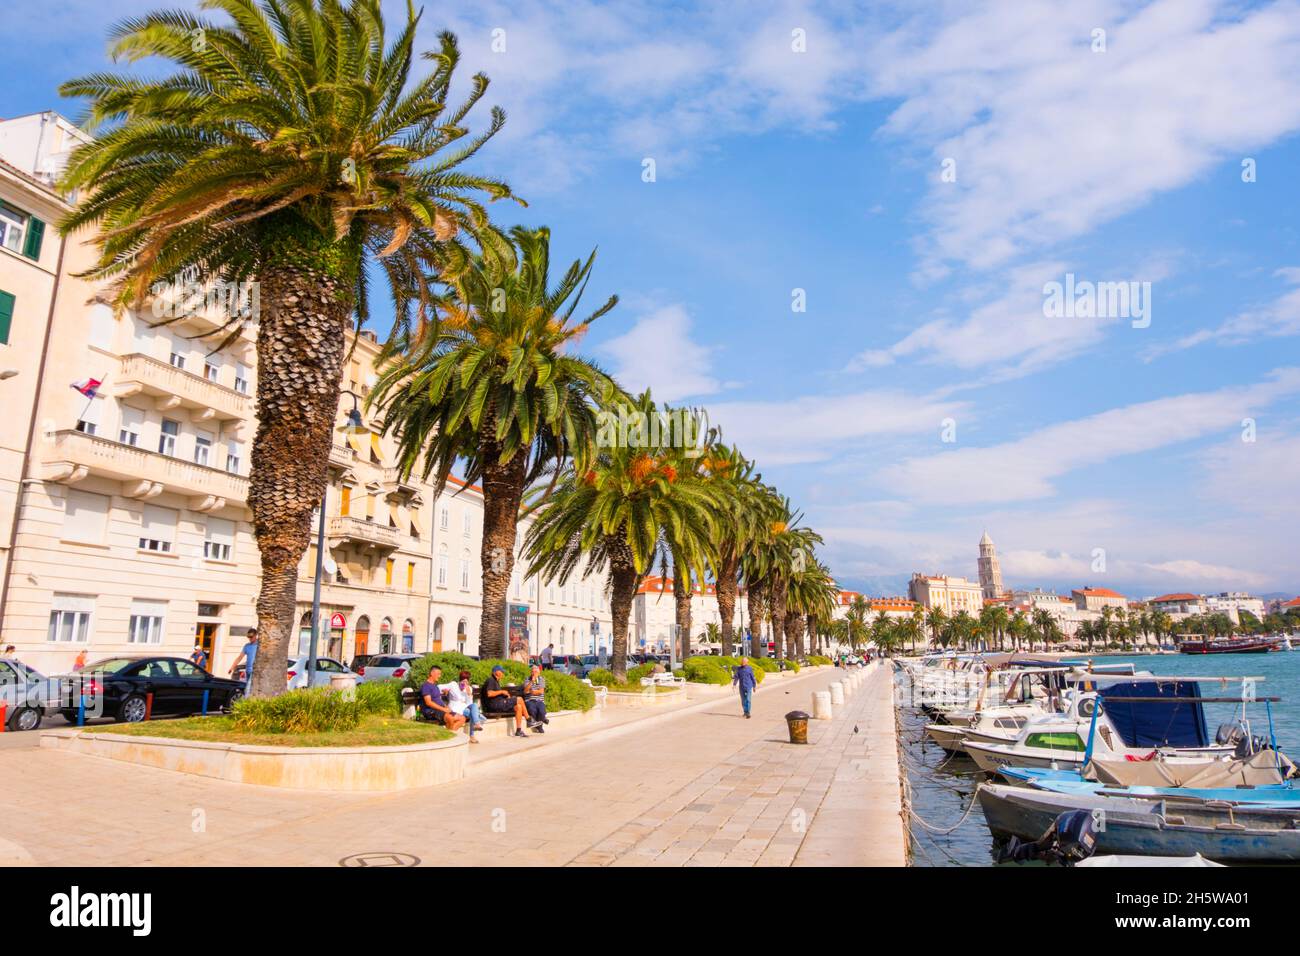 Trumbićeva obala, seaside promenade in front of Varos district, Split, Croatia Stock Photo